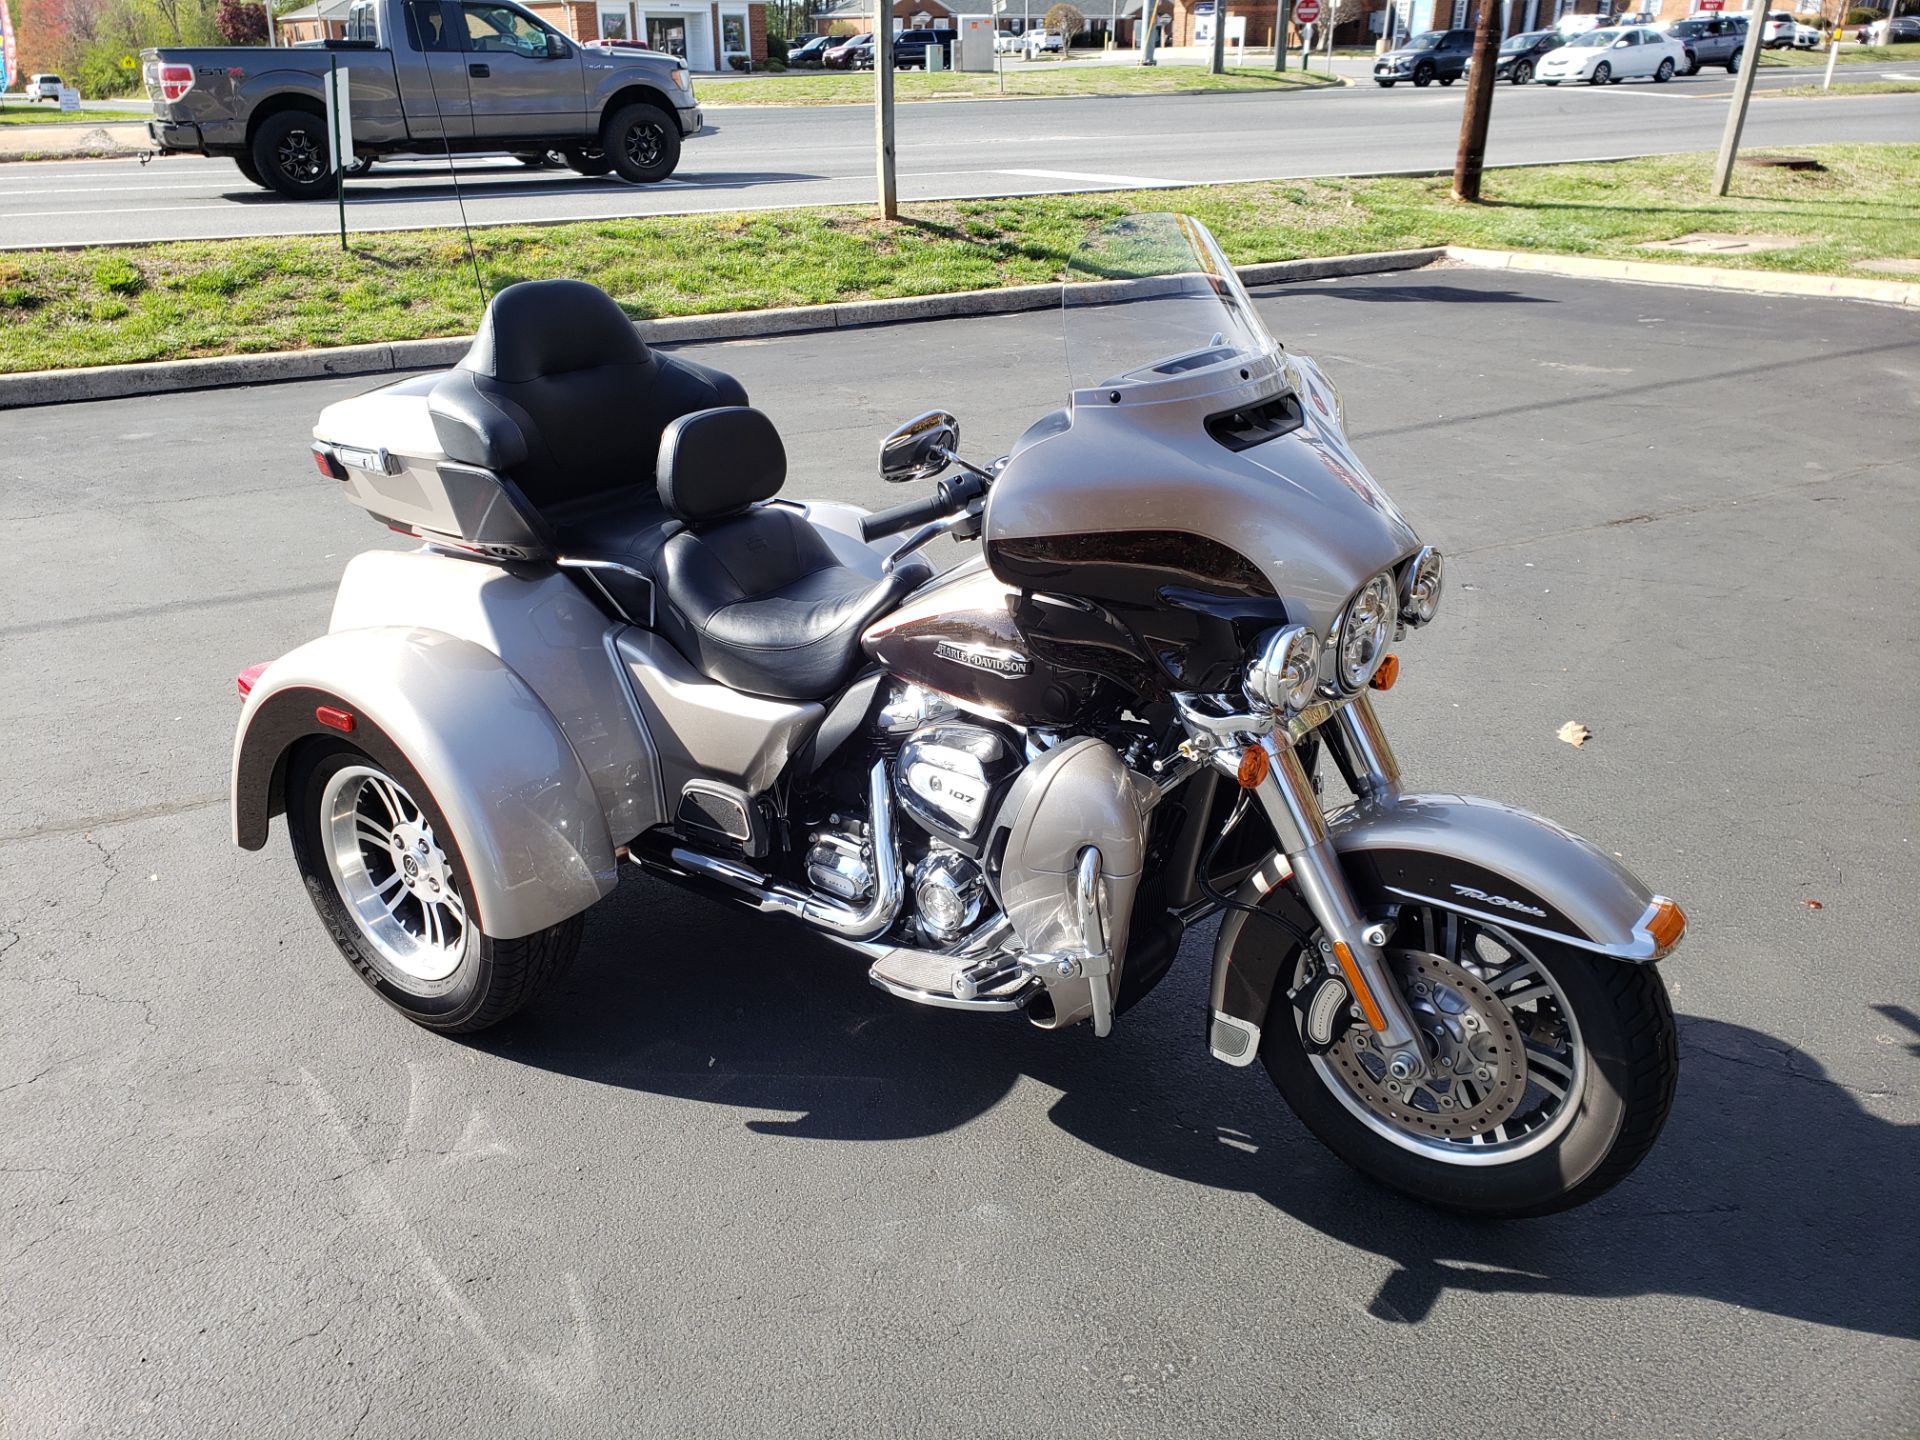 2018 Harley-Davidson Tri Glide® Ultra in Lynchburg, Virginia - Photo 1